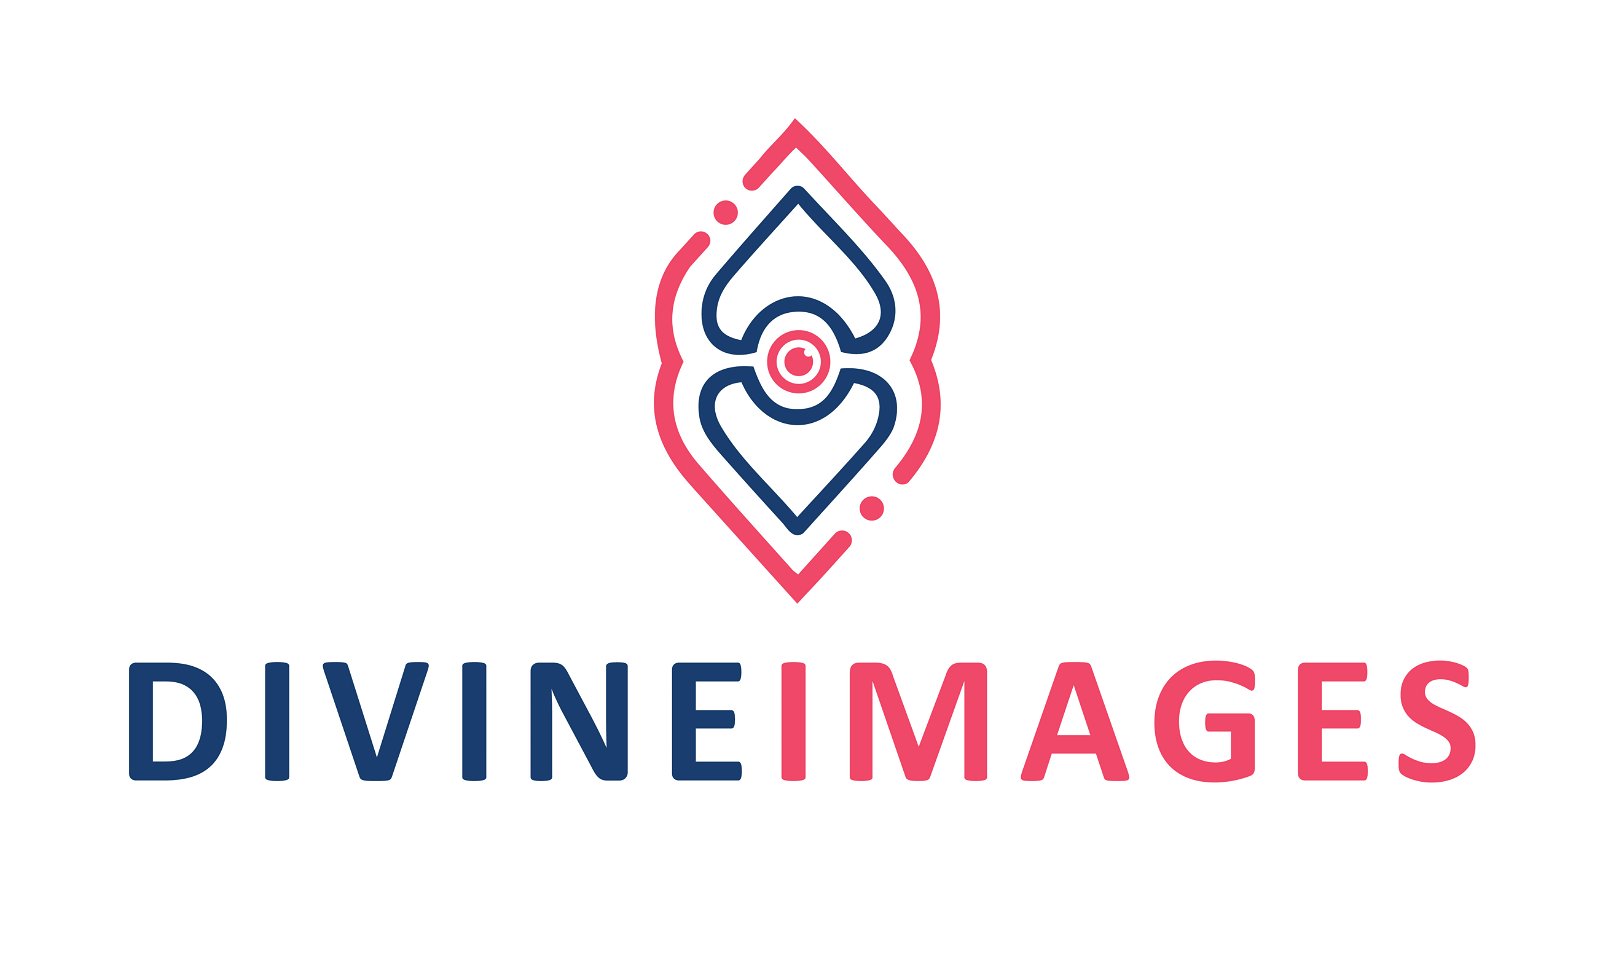 DivineImages.com - Creative brandable domain for sale